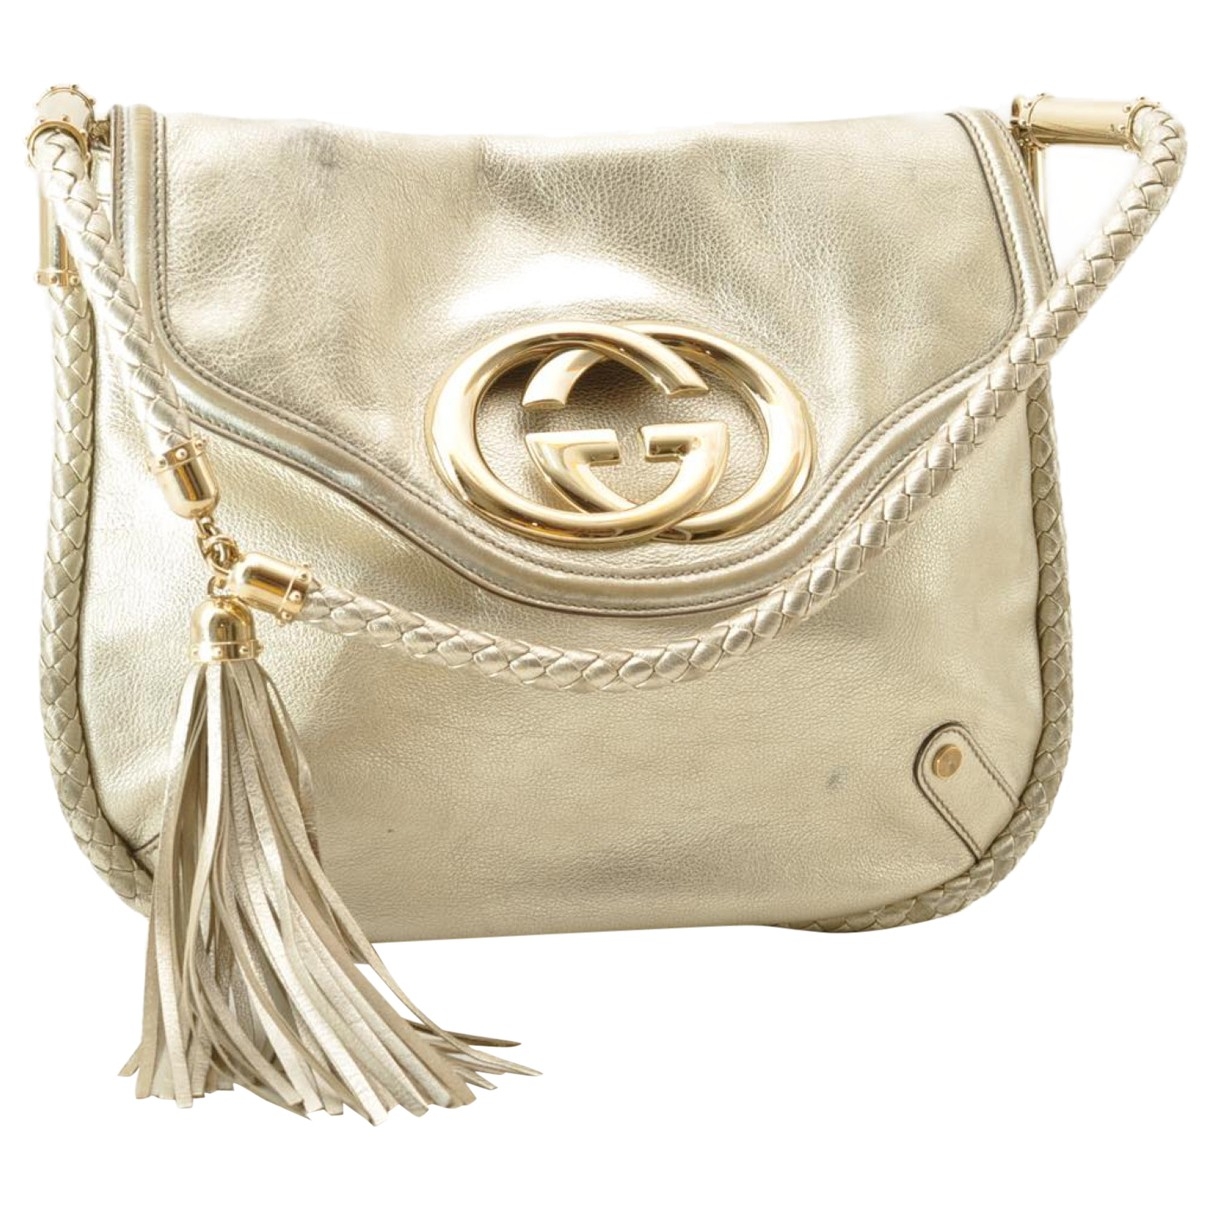 Purchase Leather Direct sale of manufacturer handbag